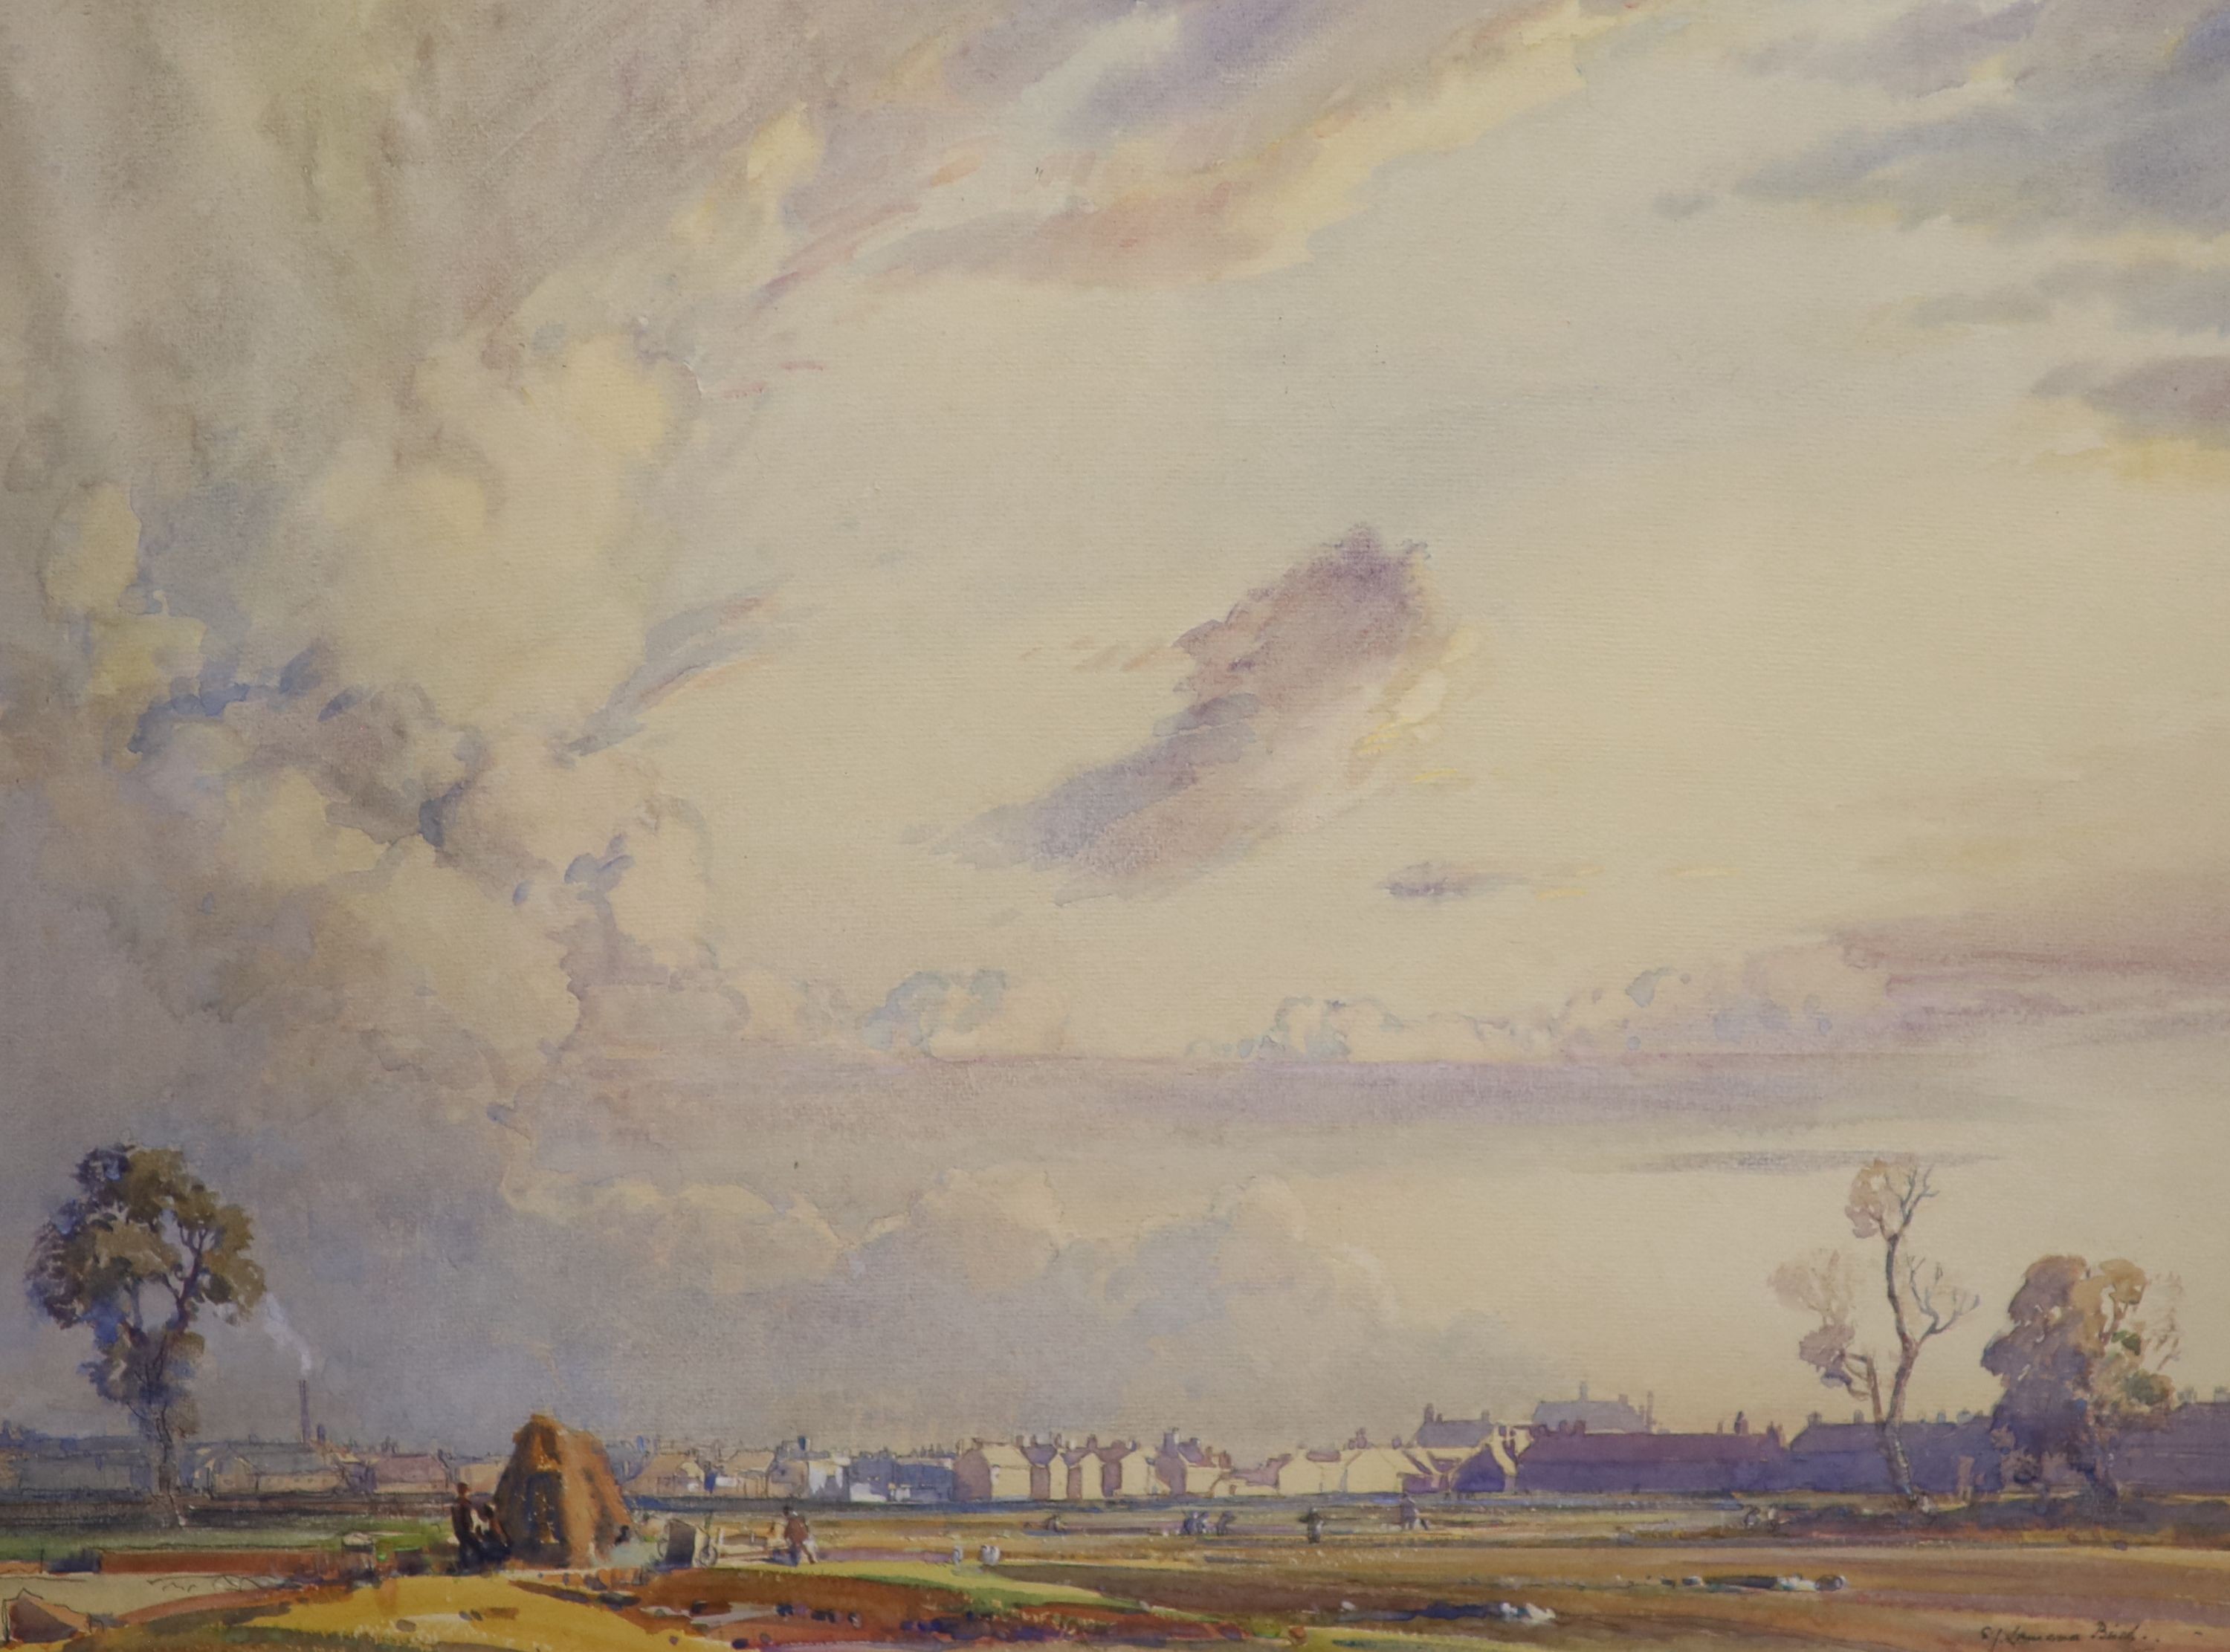 Samuel John Lamorna Birch (1869–1955), 'A Manchester Playing Ground', watercolour, 44 x 56cm